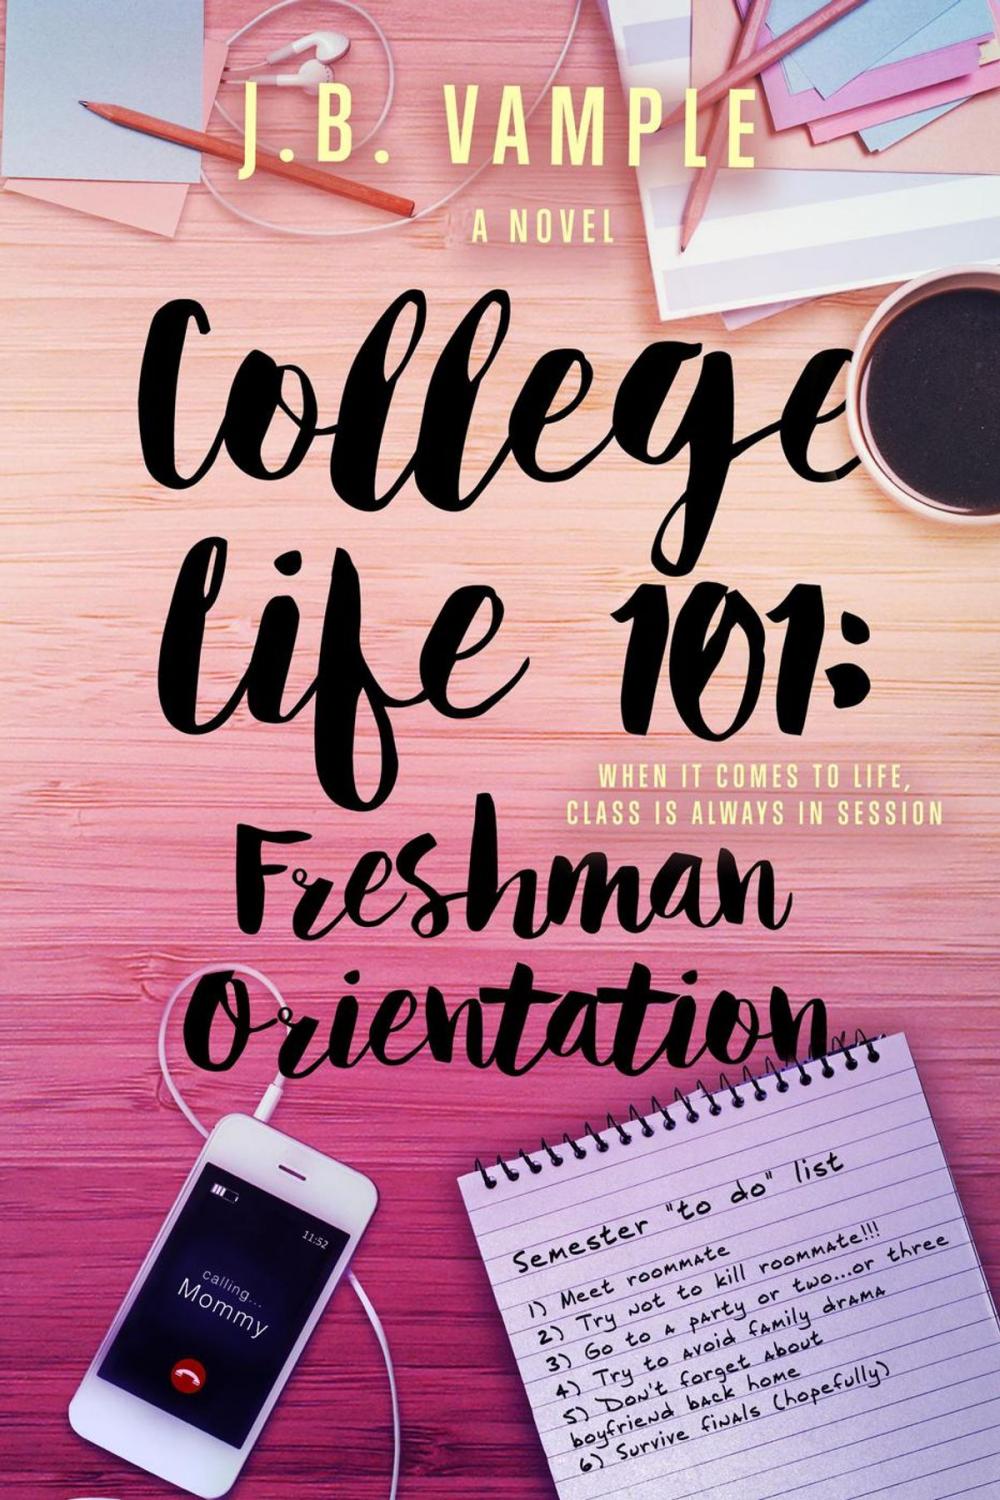 Big bigCover of College Life 101: Freshman Orientation